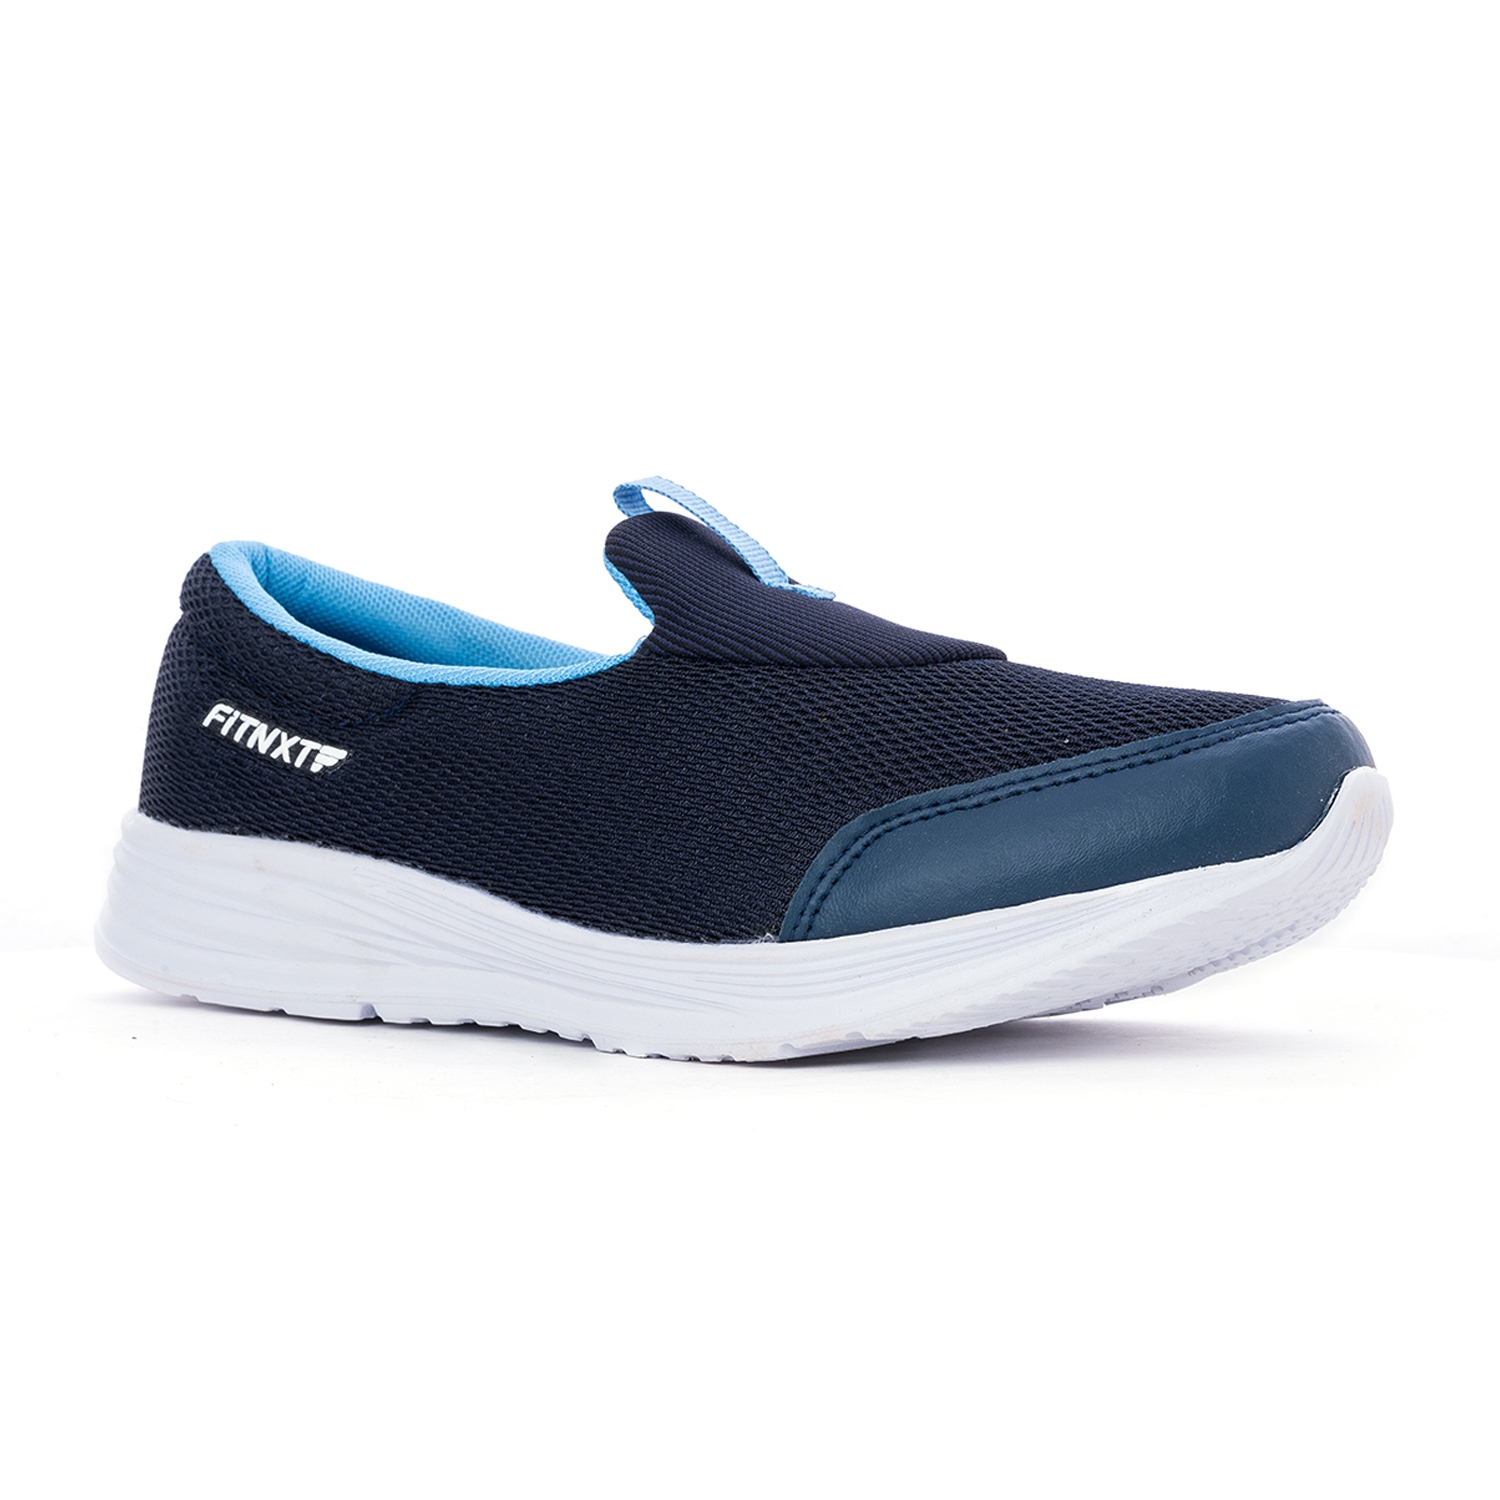 Khadim | Fitnxt Navy Walking Sports Shoes for Women